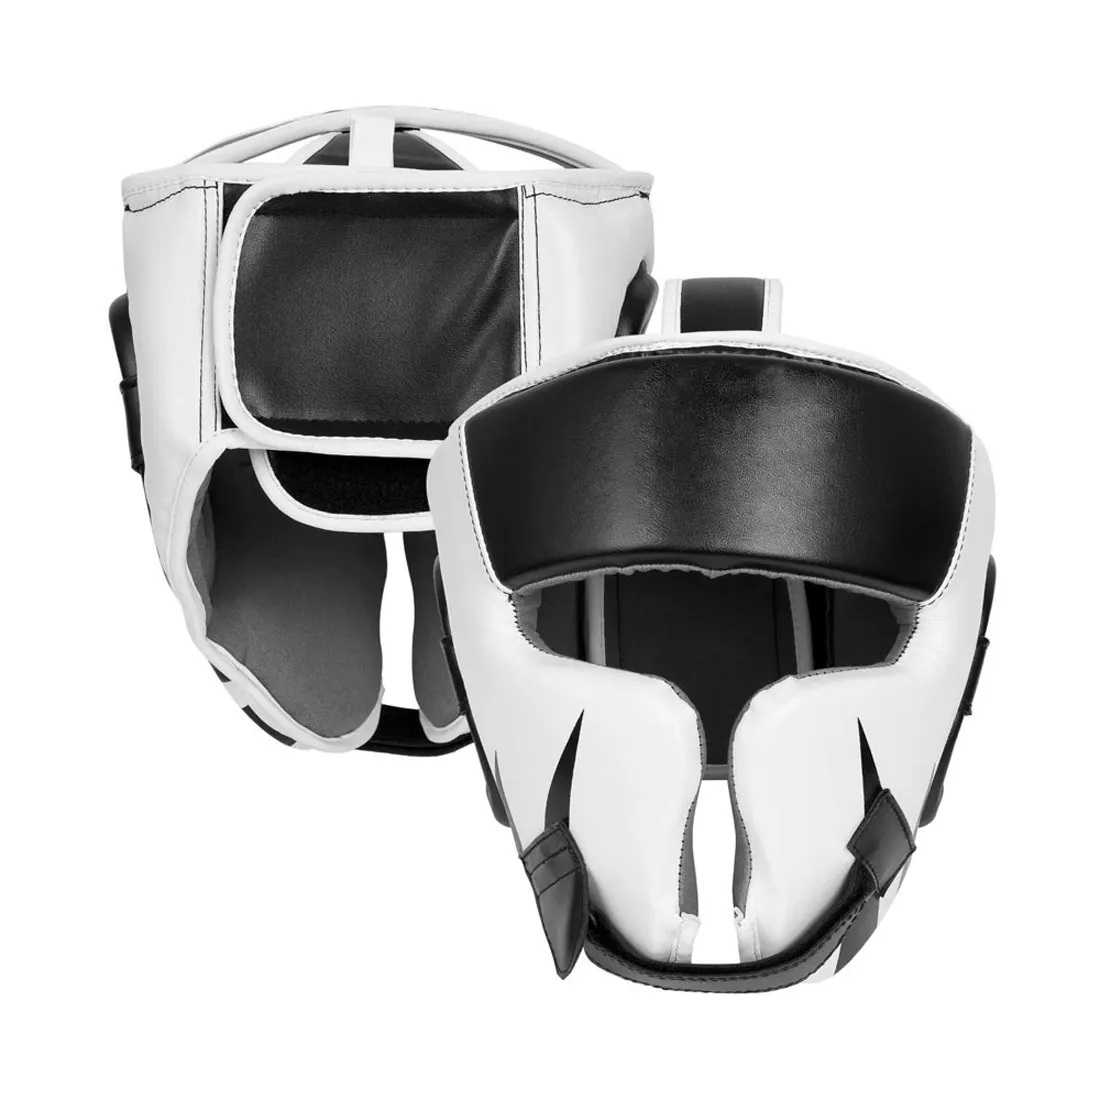 Casque de protection de la tête Protection du visage Kick Boxing Headgear Protector Helmet For Headguards Martial Arts Boxing Training